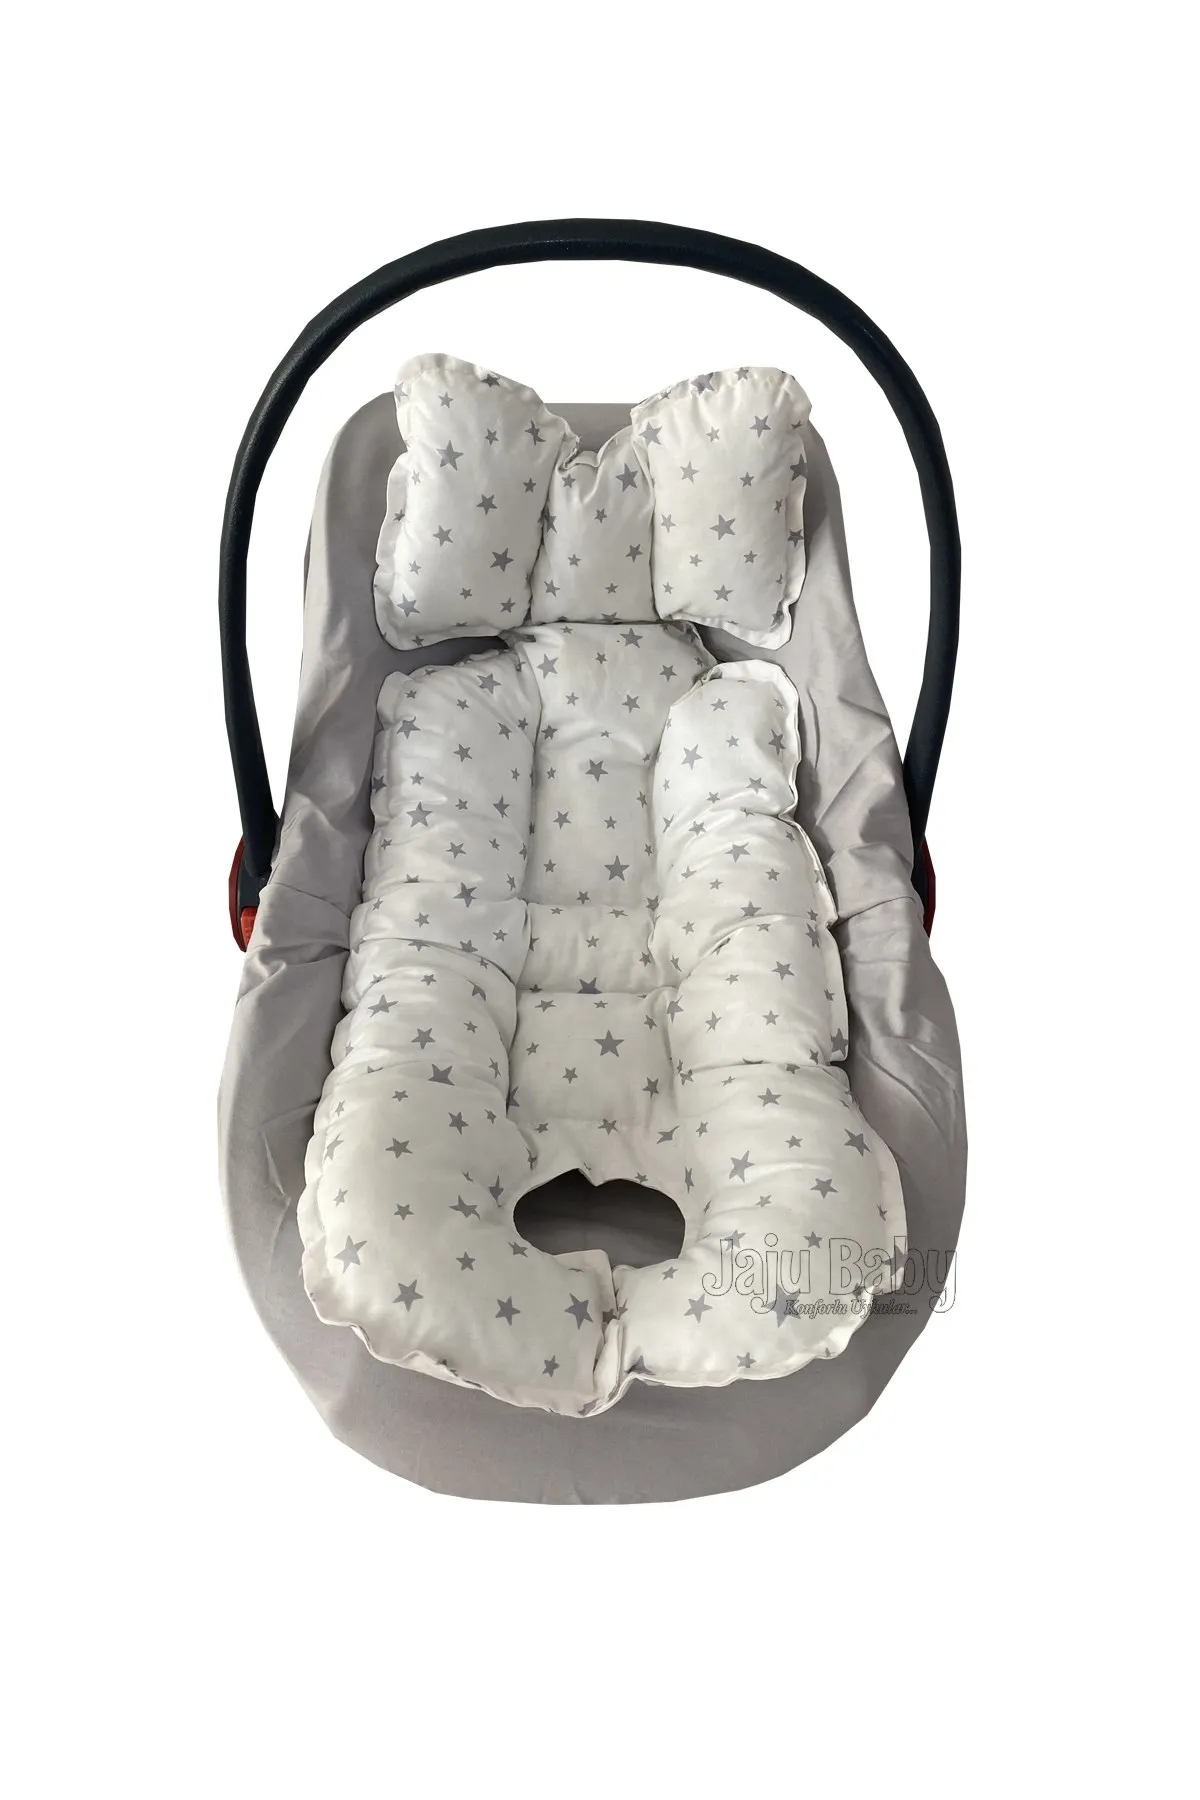 

Jaju Baby Handmade Gray Star Design Luxury Orthopedic Car Seat Cushion - Stroller Cushion Accessory, Newborn 0-12 Months Use